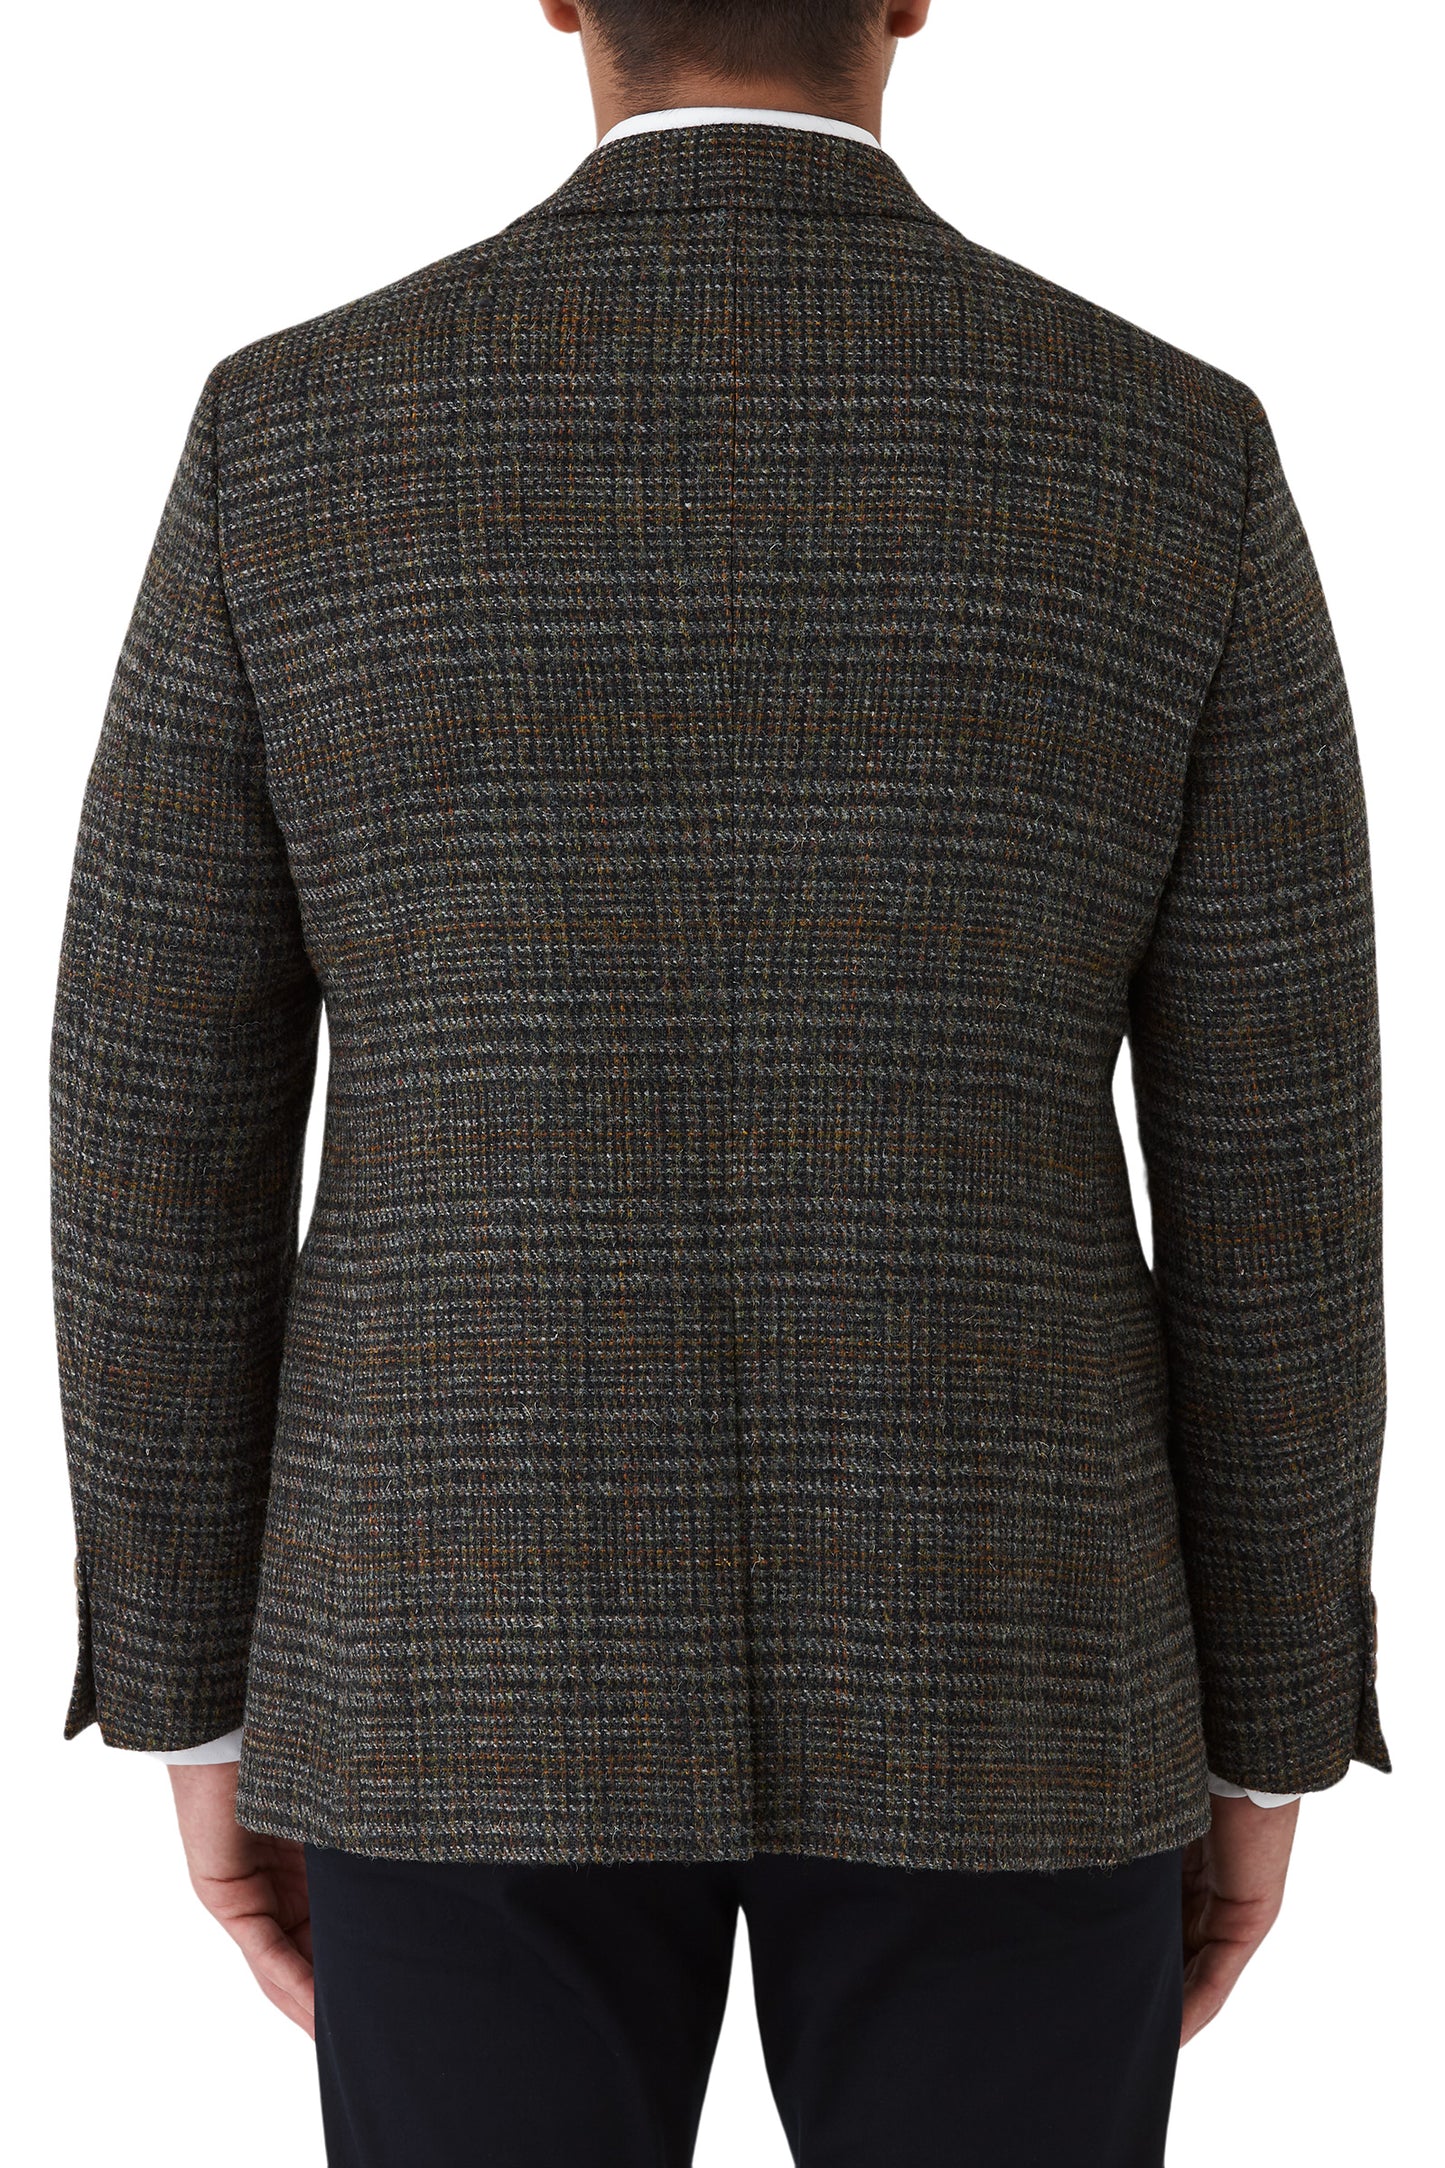 Cambridge - Harris Tweed Jacket - Khaki/Brown